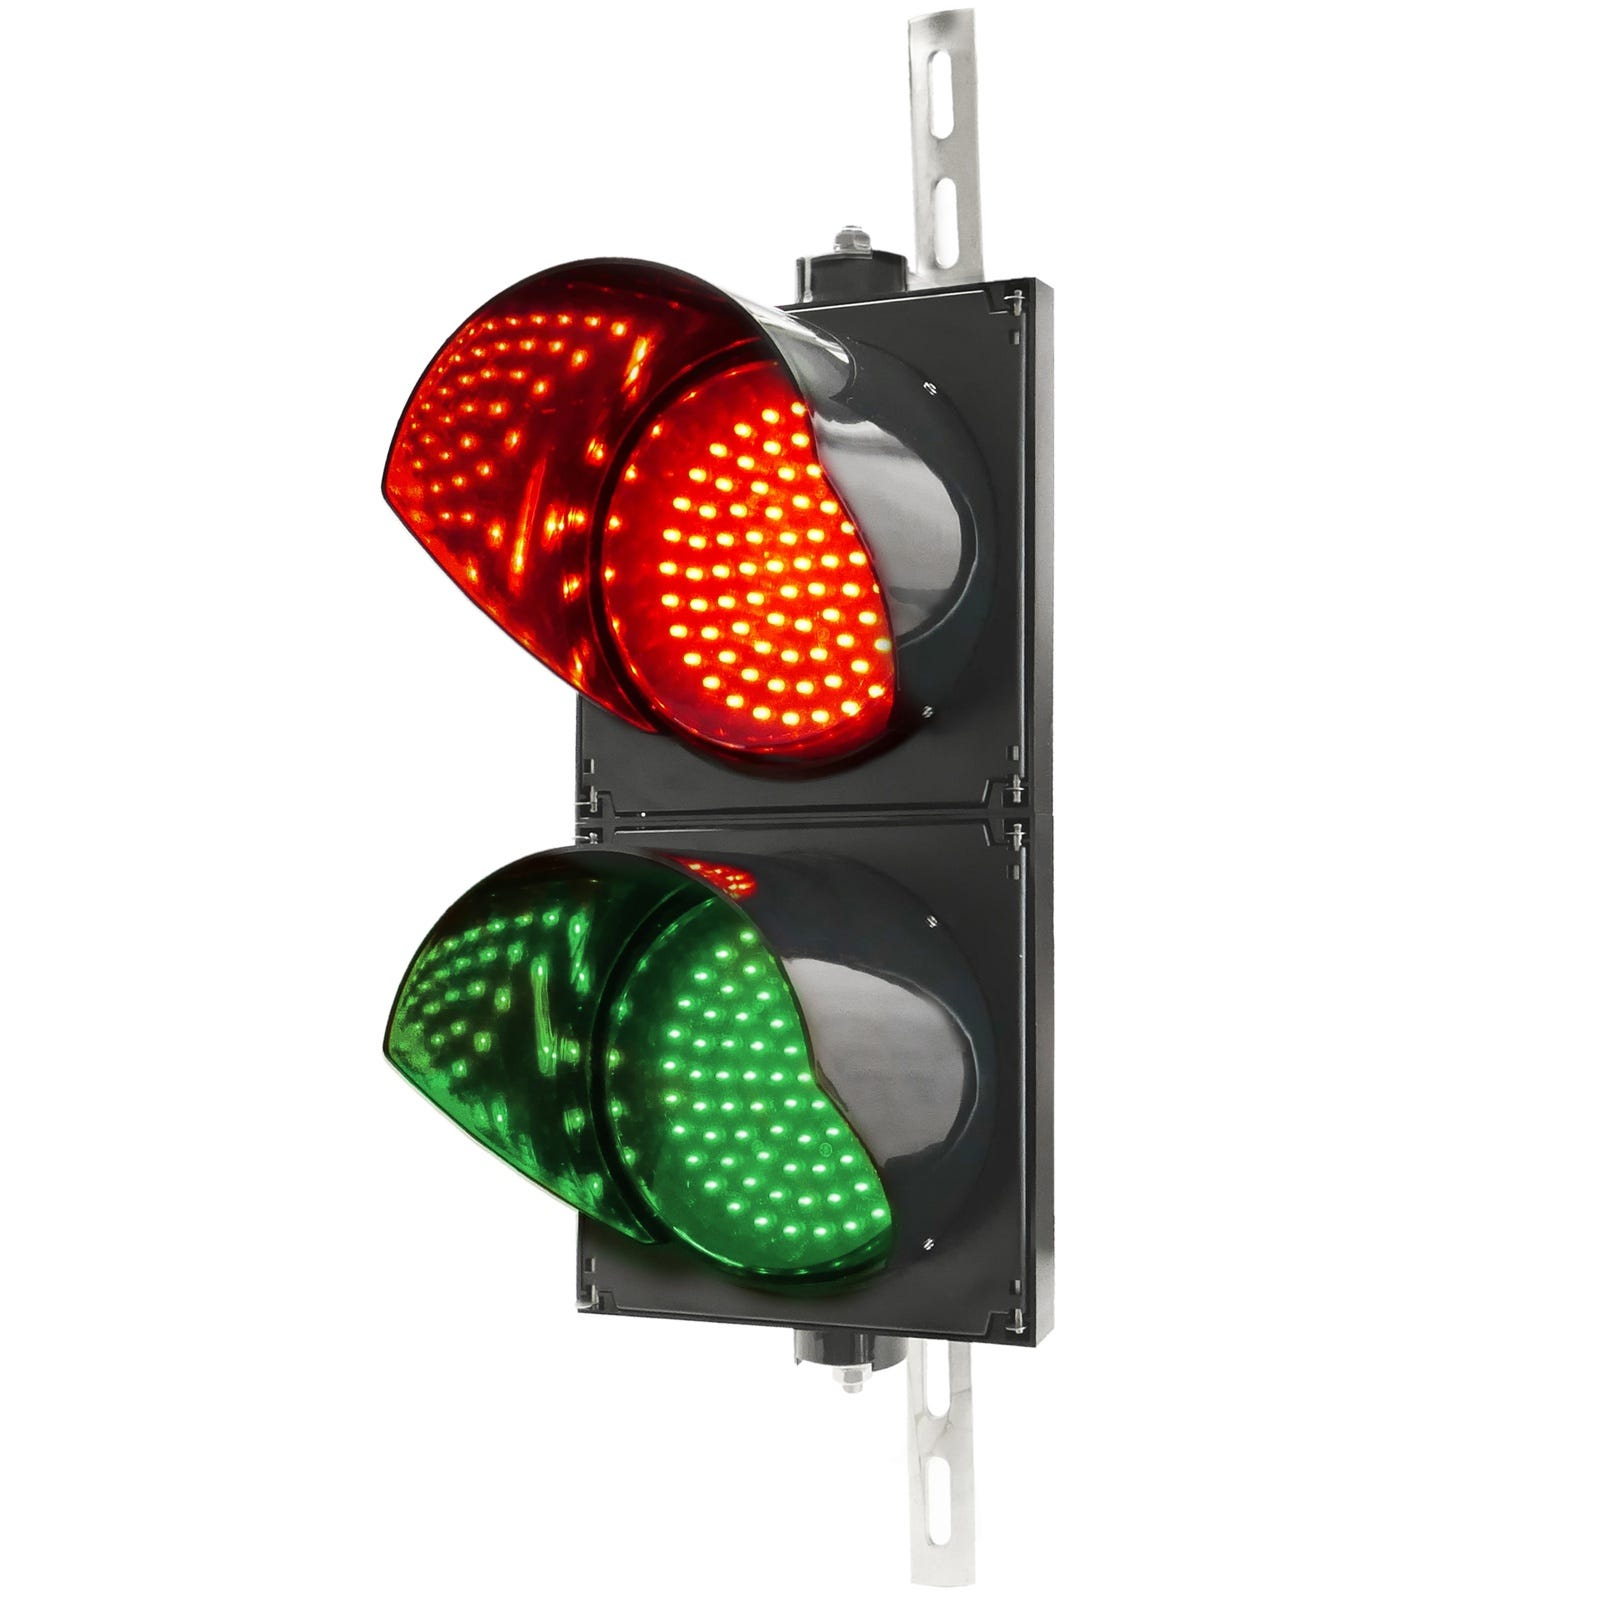 Semaforo 220V 200mm 2X con luci LED verdi e rosse